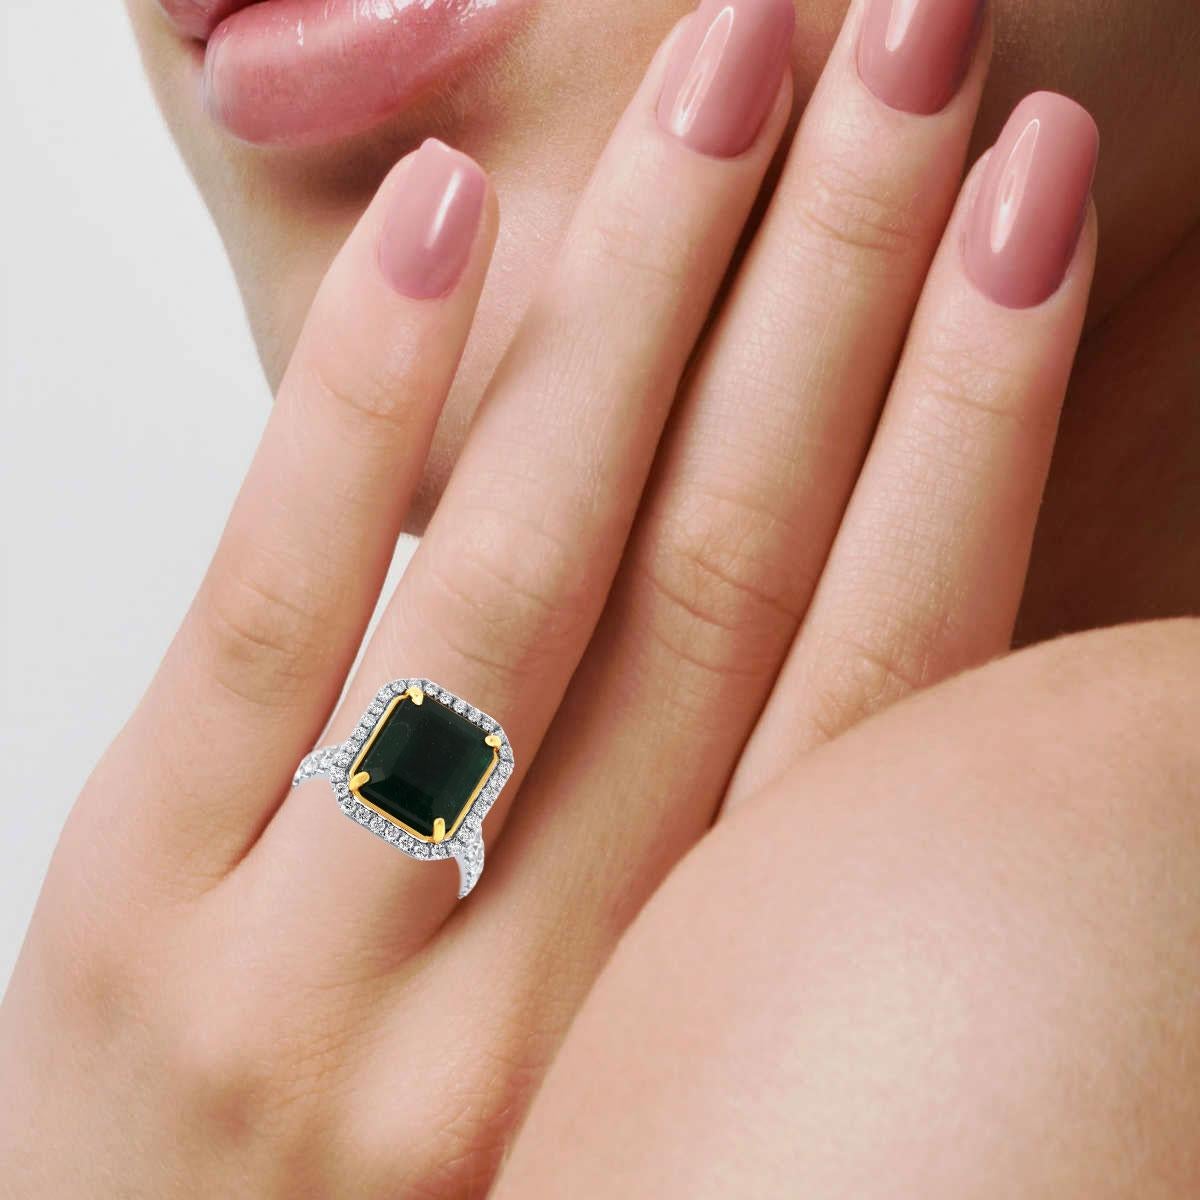 Emerald Cut 14K White & Yellow Gold GIA Certified 7.51 Carat Green Emerald Halo Diamond Ring For Sale